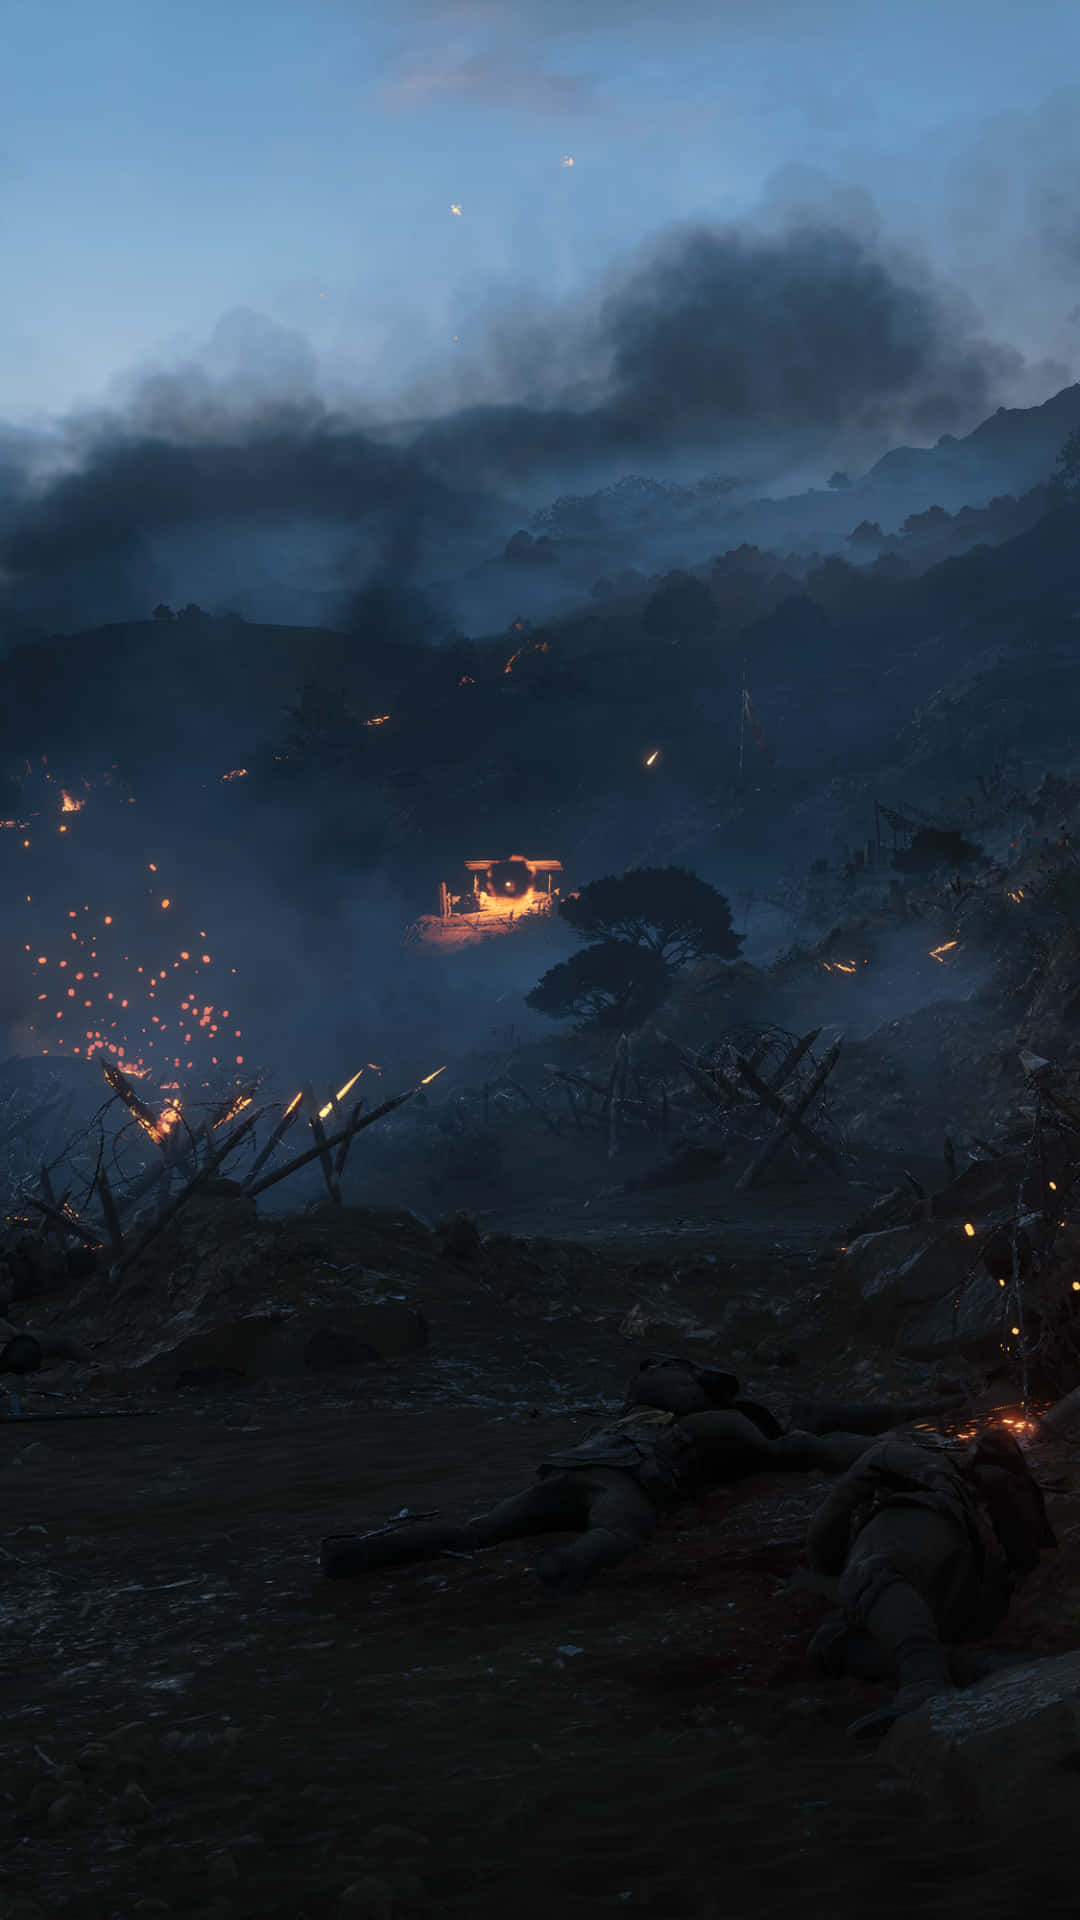 Pixel 3xl Battlefield 1 baggrund Soldater Kravler på Gulvet